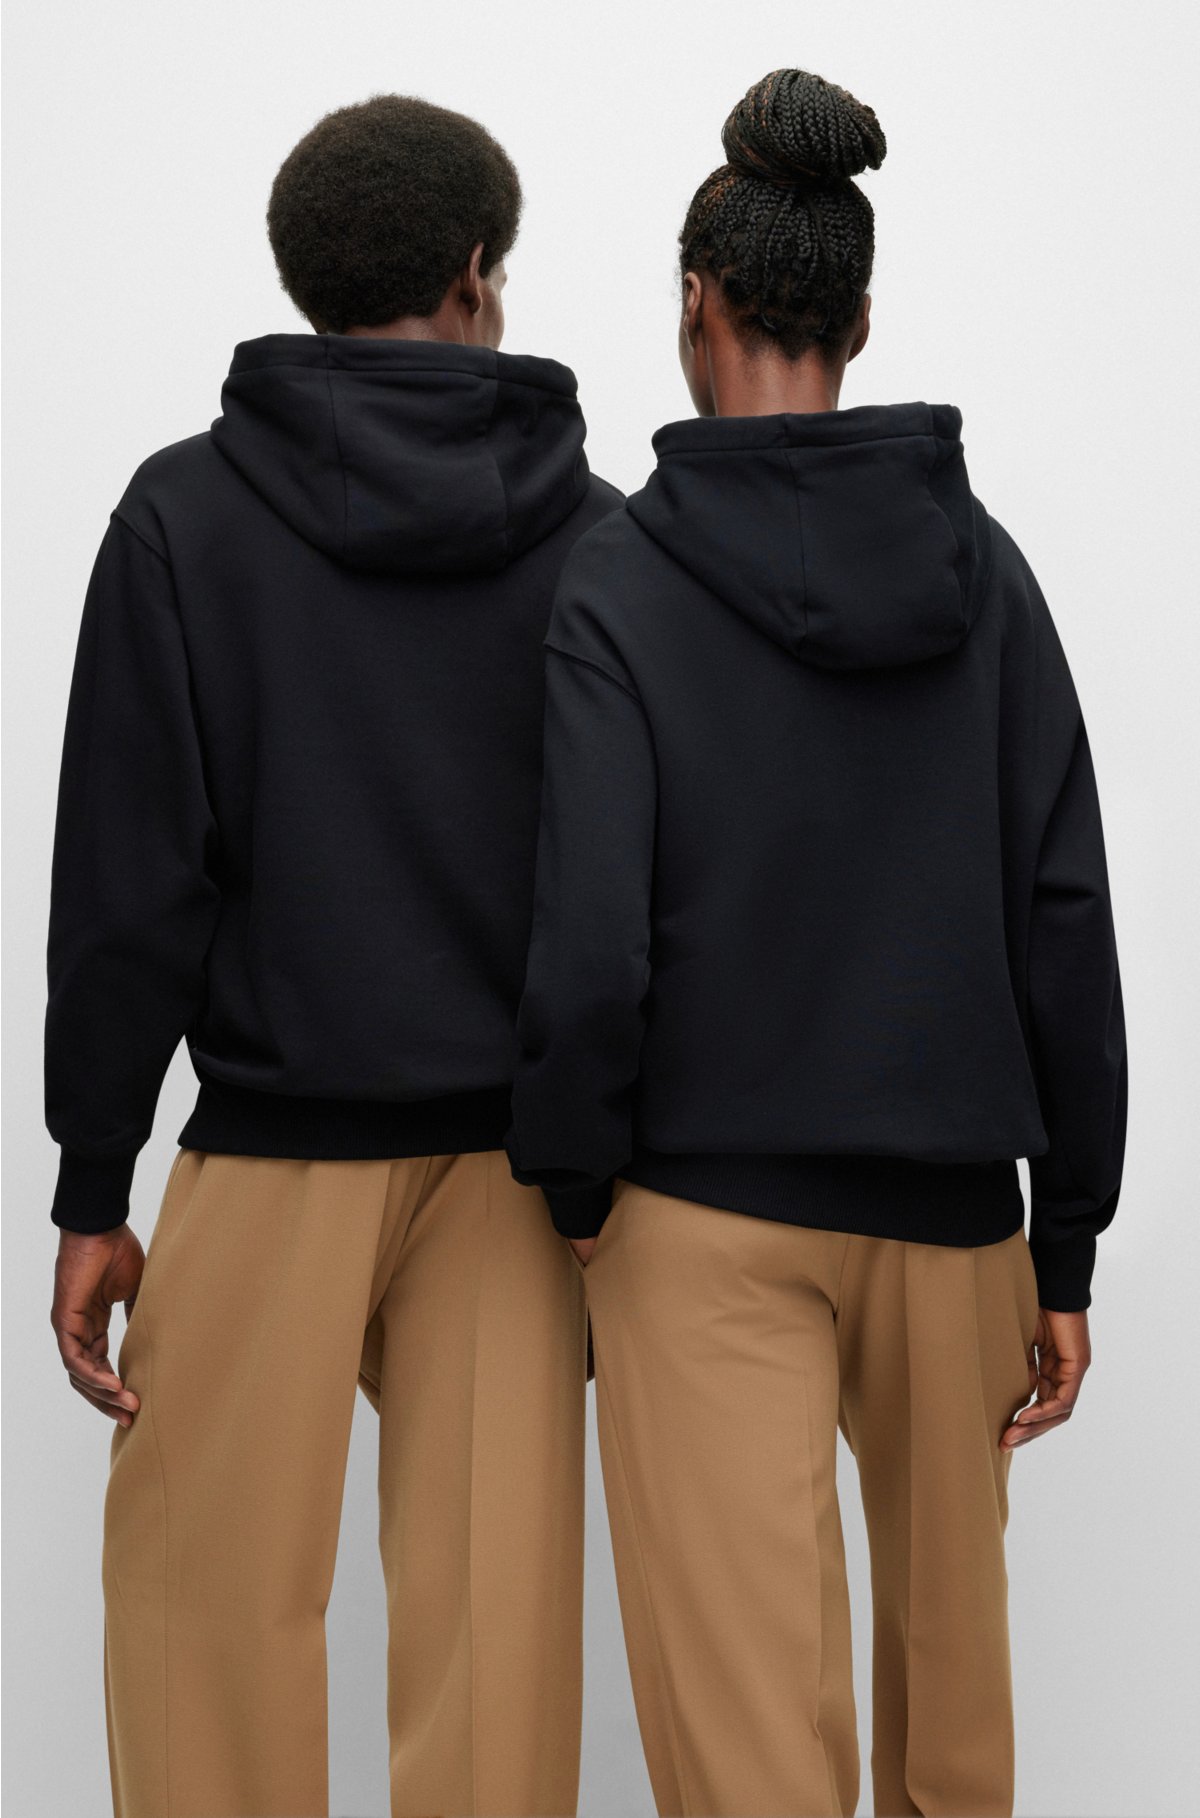 TBKOMH Mens Hoodie Sweatshirt for Men Soft Elegant Long Sleeve